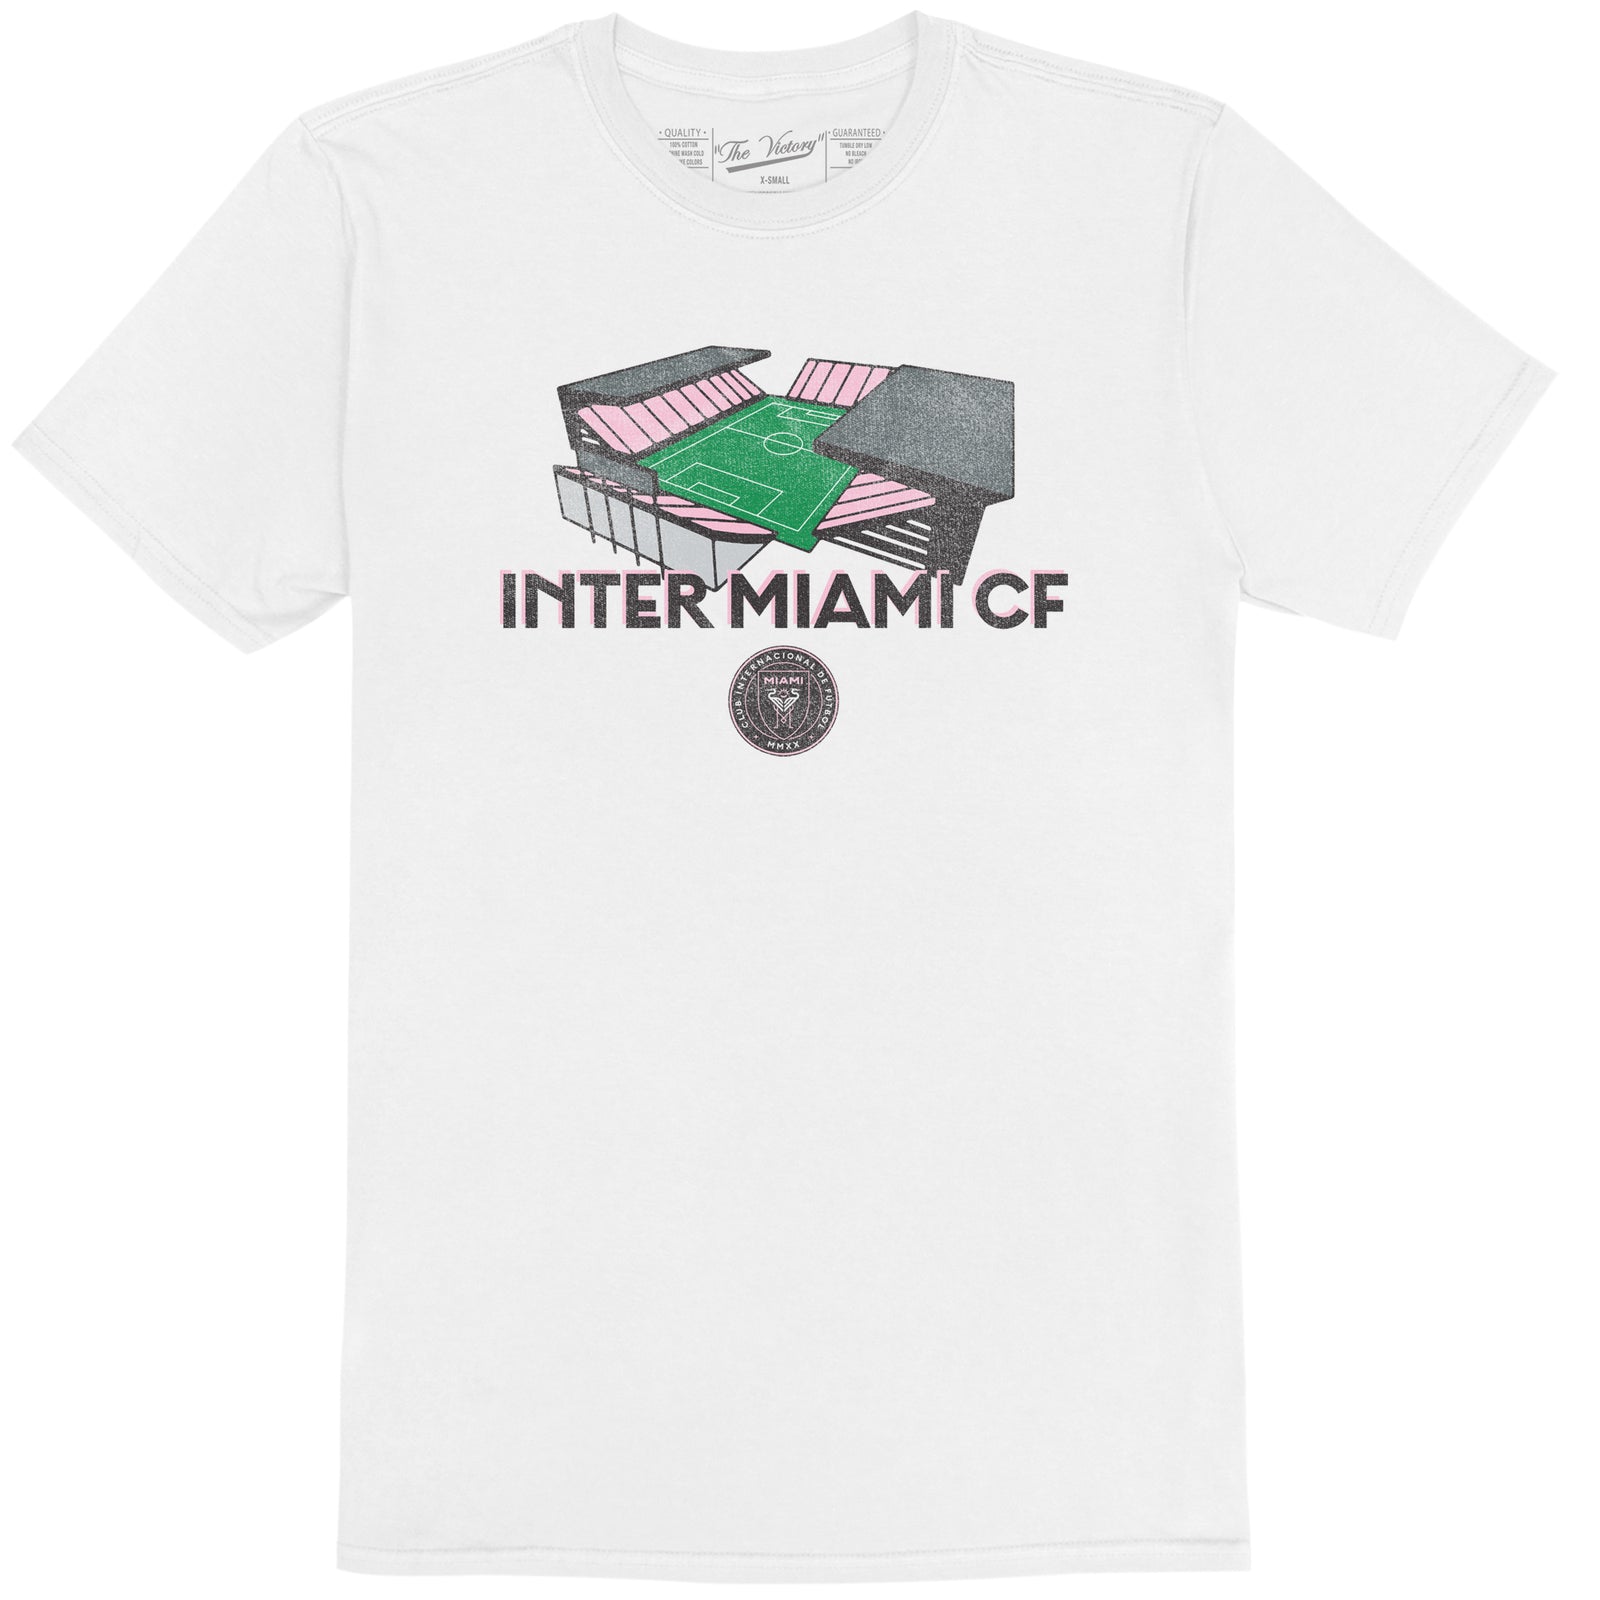 Inter Miami CF Youth Tee